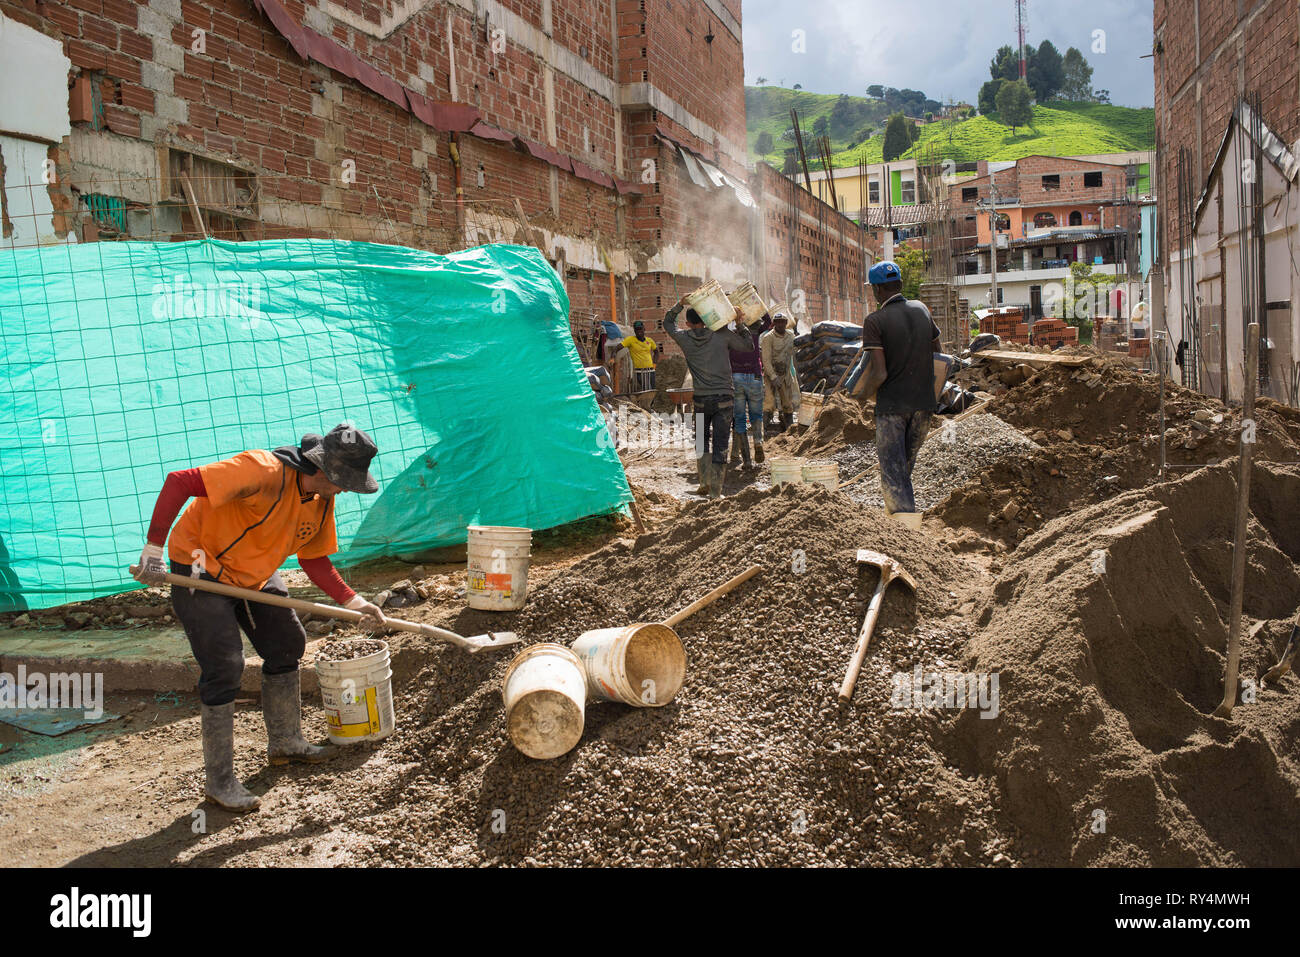 Donmatias, Antioquia, Kolumbien: Maurer in einer Baustelle. Stockfoto